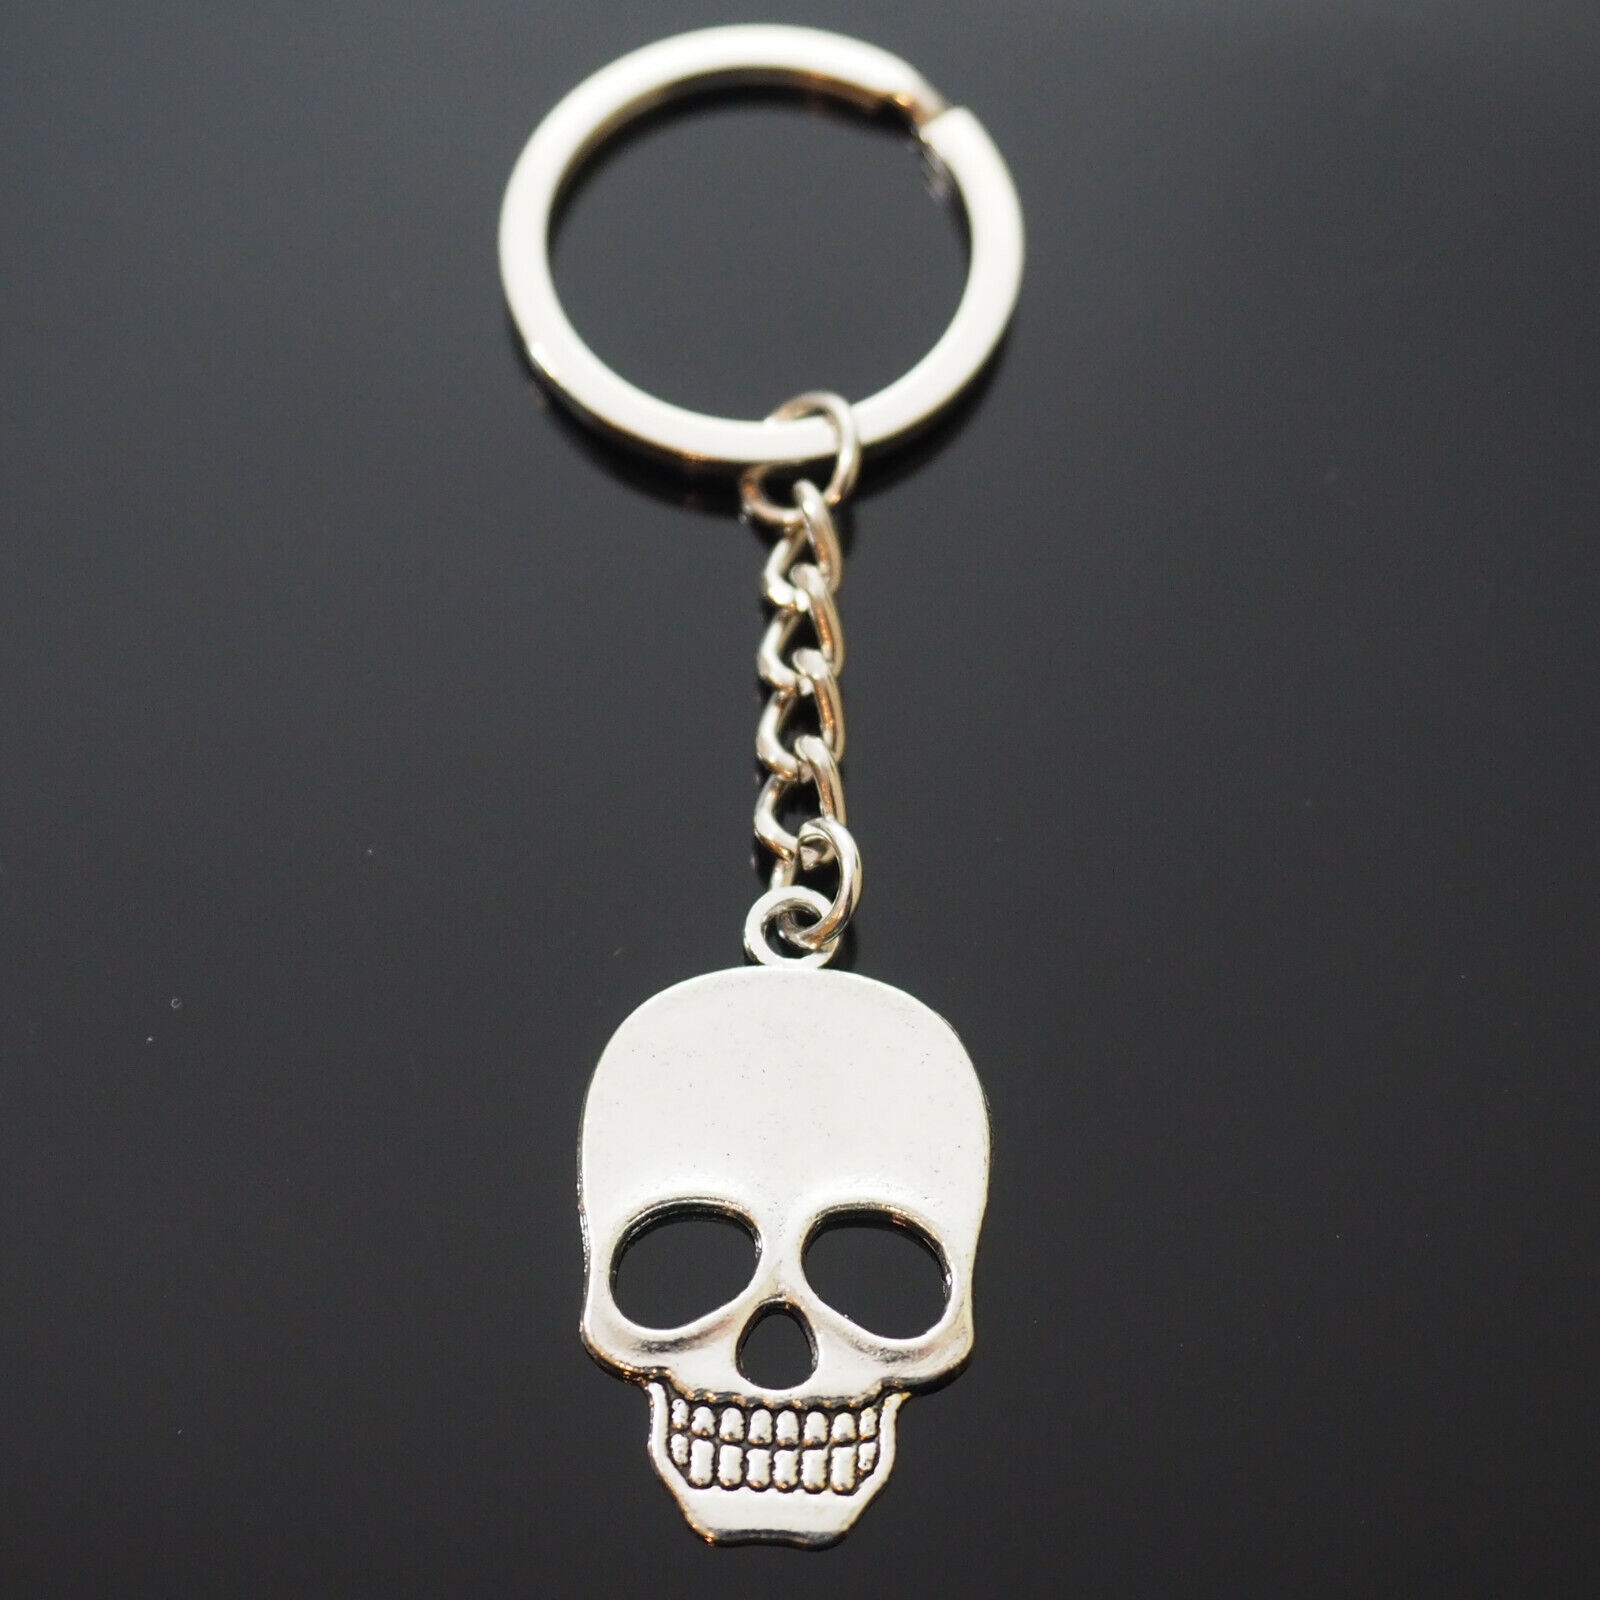 Skeleton Grinning Teeth Skull Bone Pendant Flat Charm Keychain Key Chain Gift